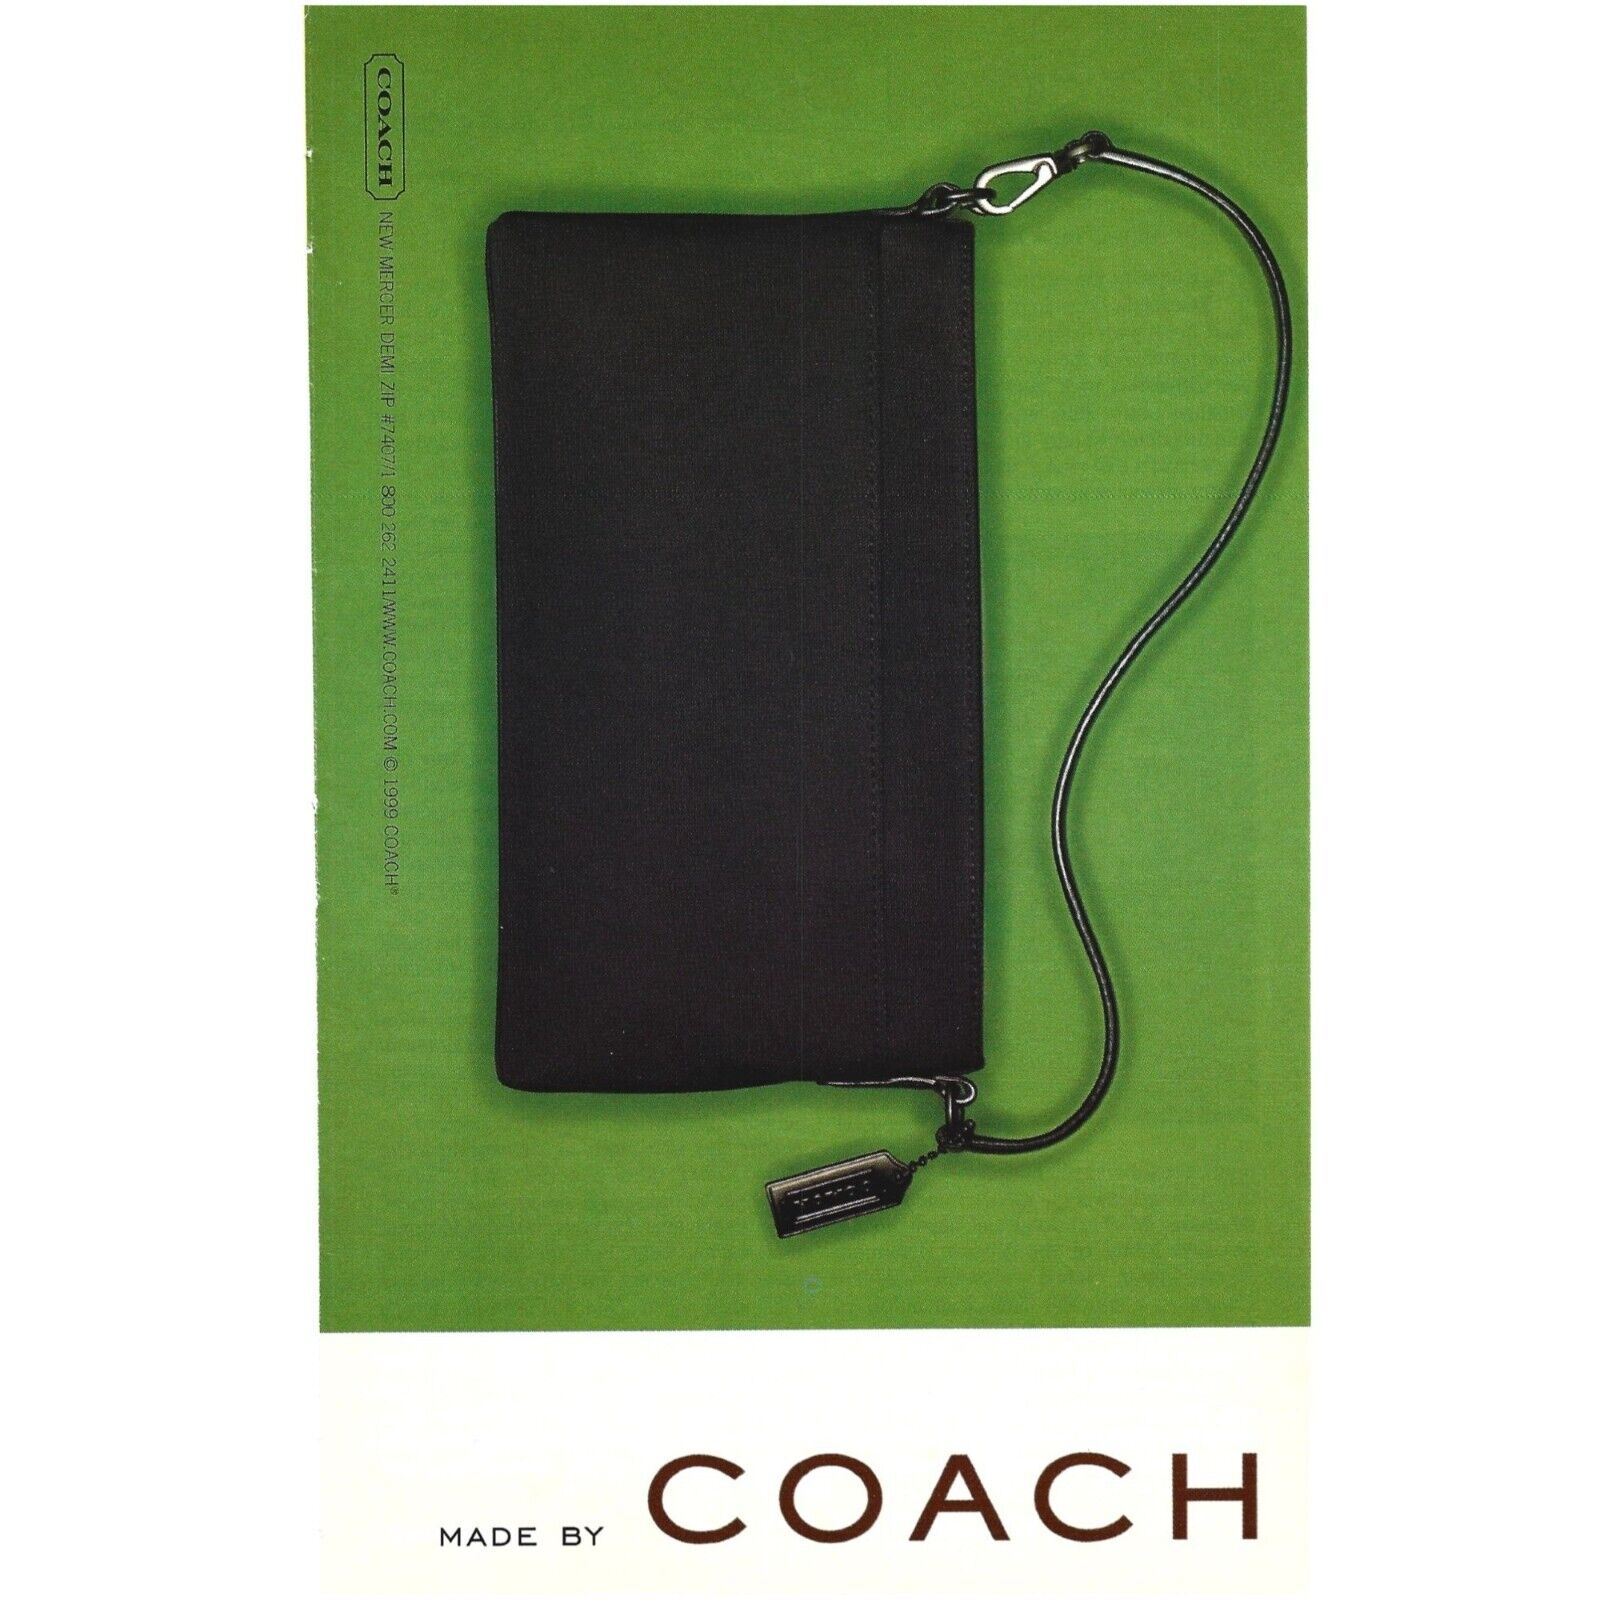 Coach New Mercer Demi Zip 1999 ADVERT Handbag Purse 1990s Vintage Print Ad